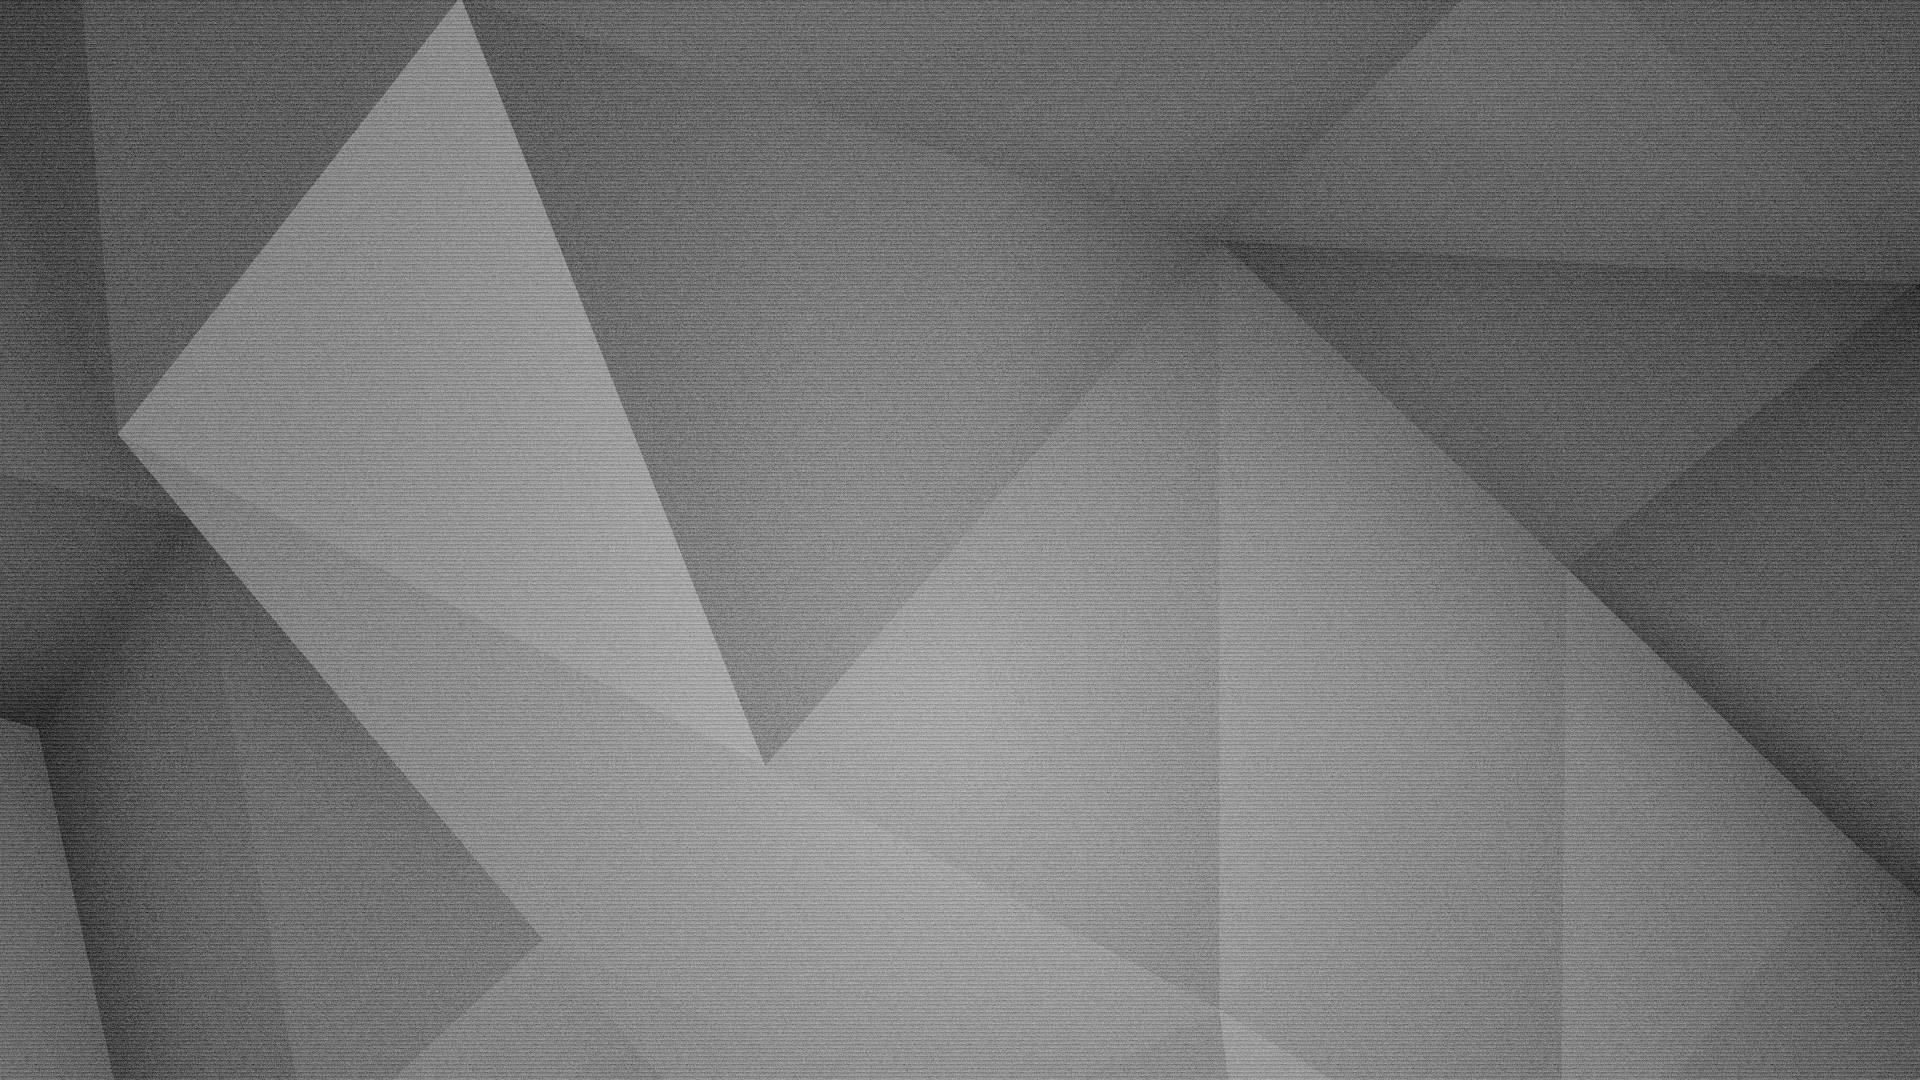 Irregular Polygon Abstract Grey Background